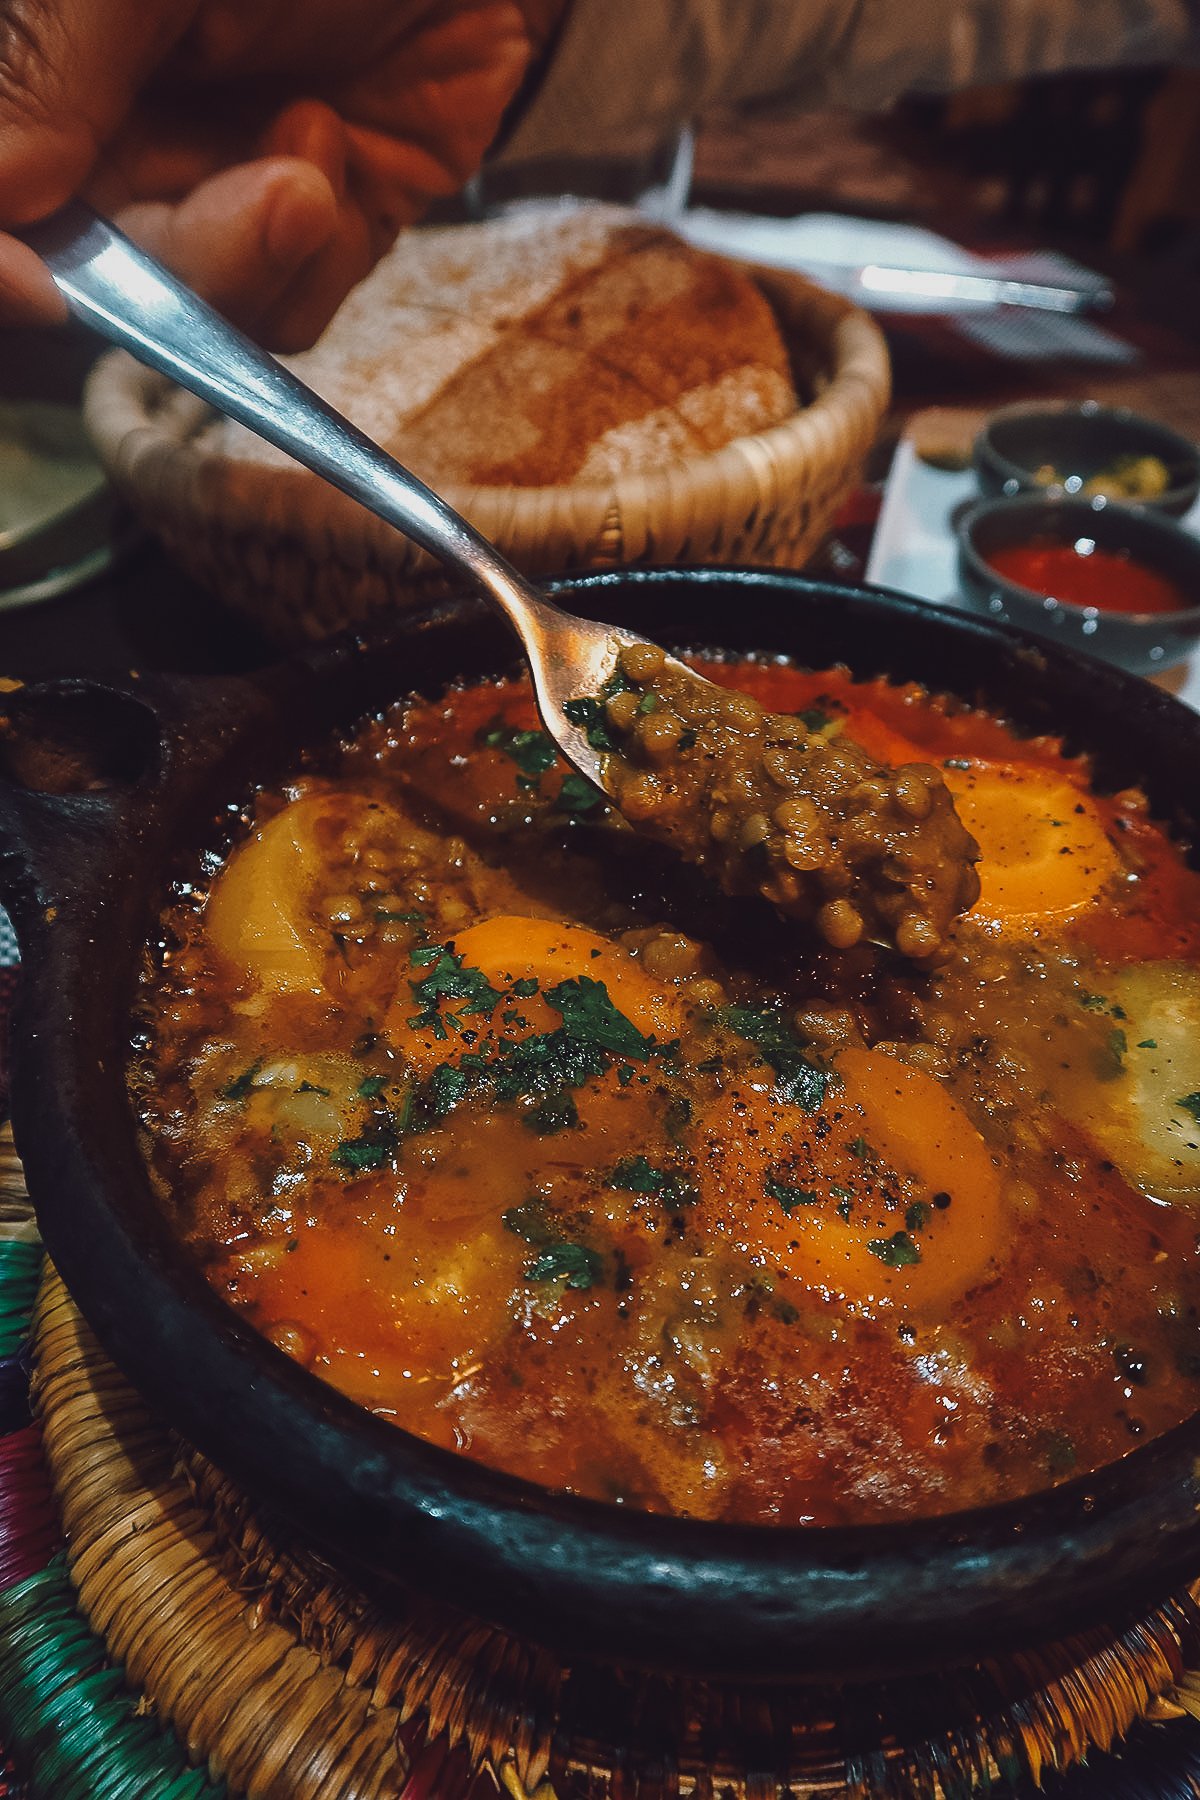 Lentil stew at a restaurant in Essaouira